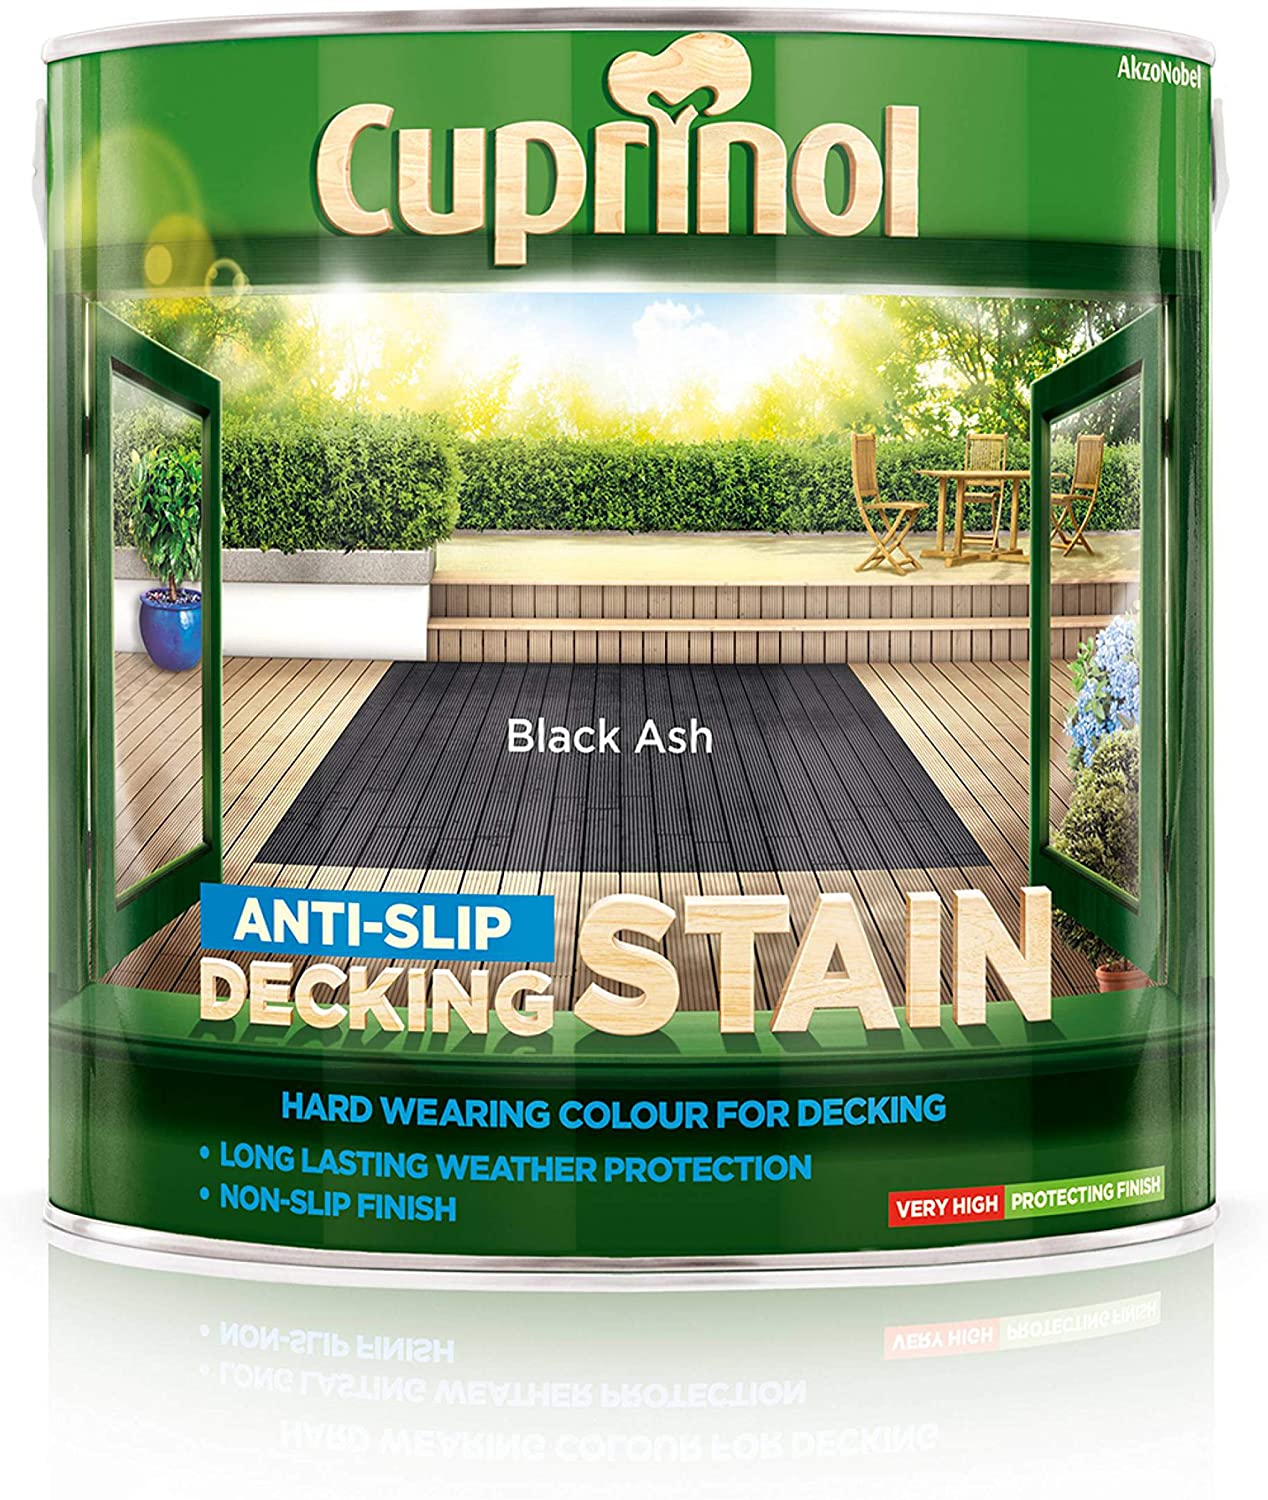 Cuprinol Anti Slip Decking Stain - Black Ash 2.5L Garden & Diy Home Improvements Painting Decorating